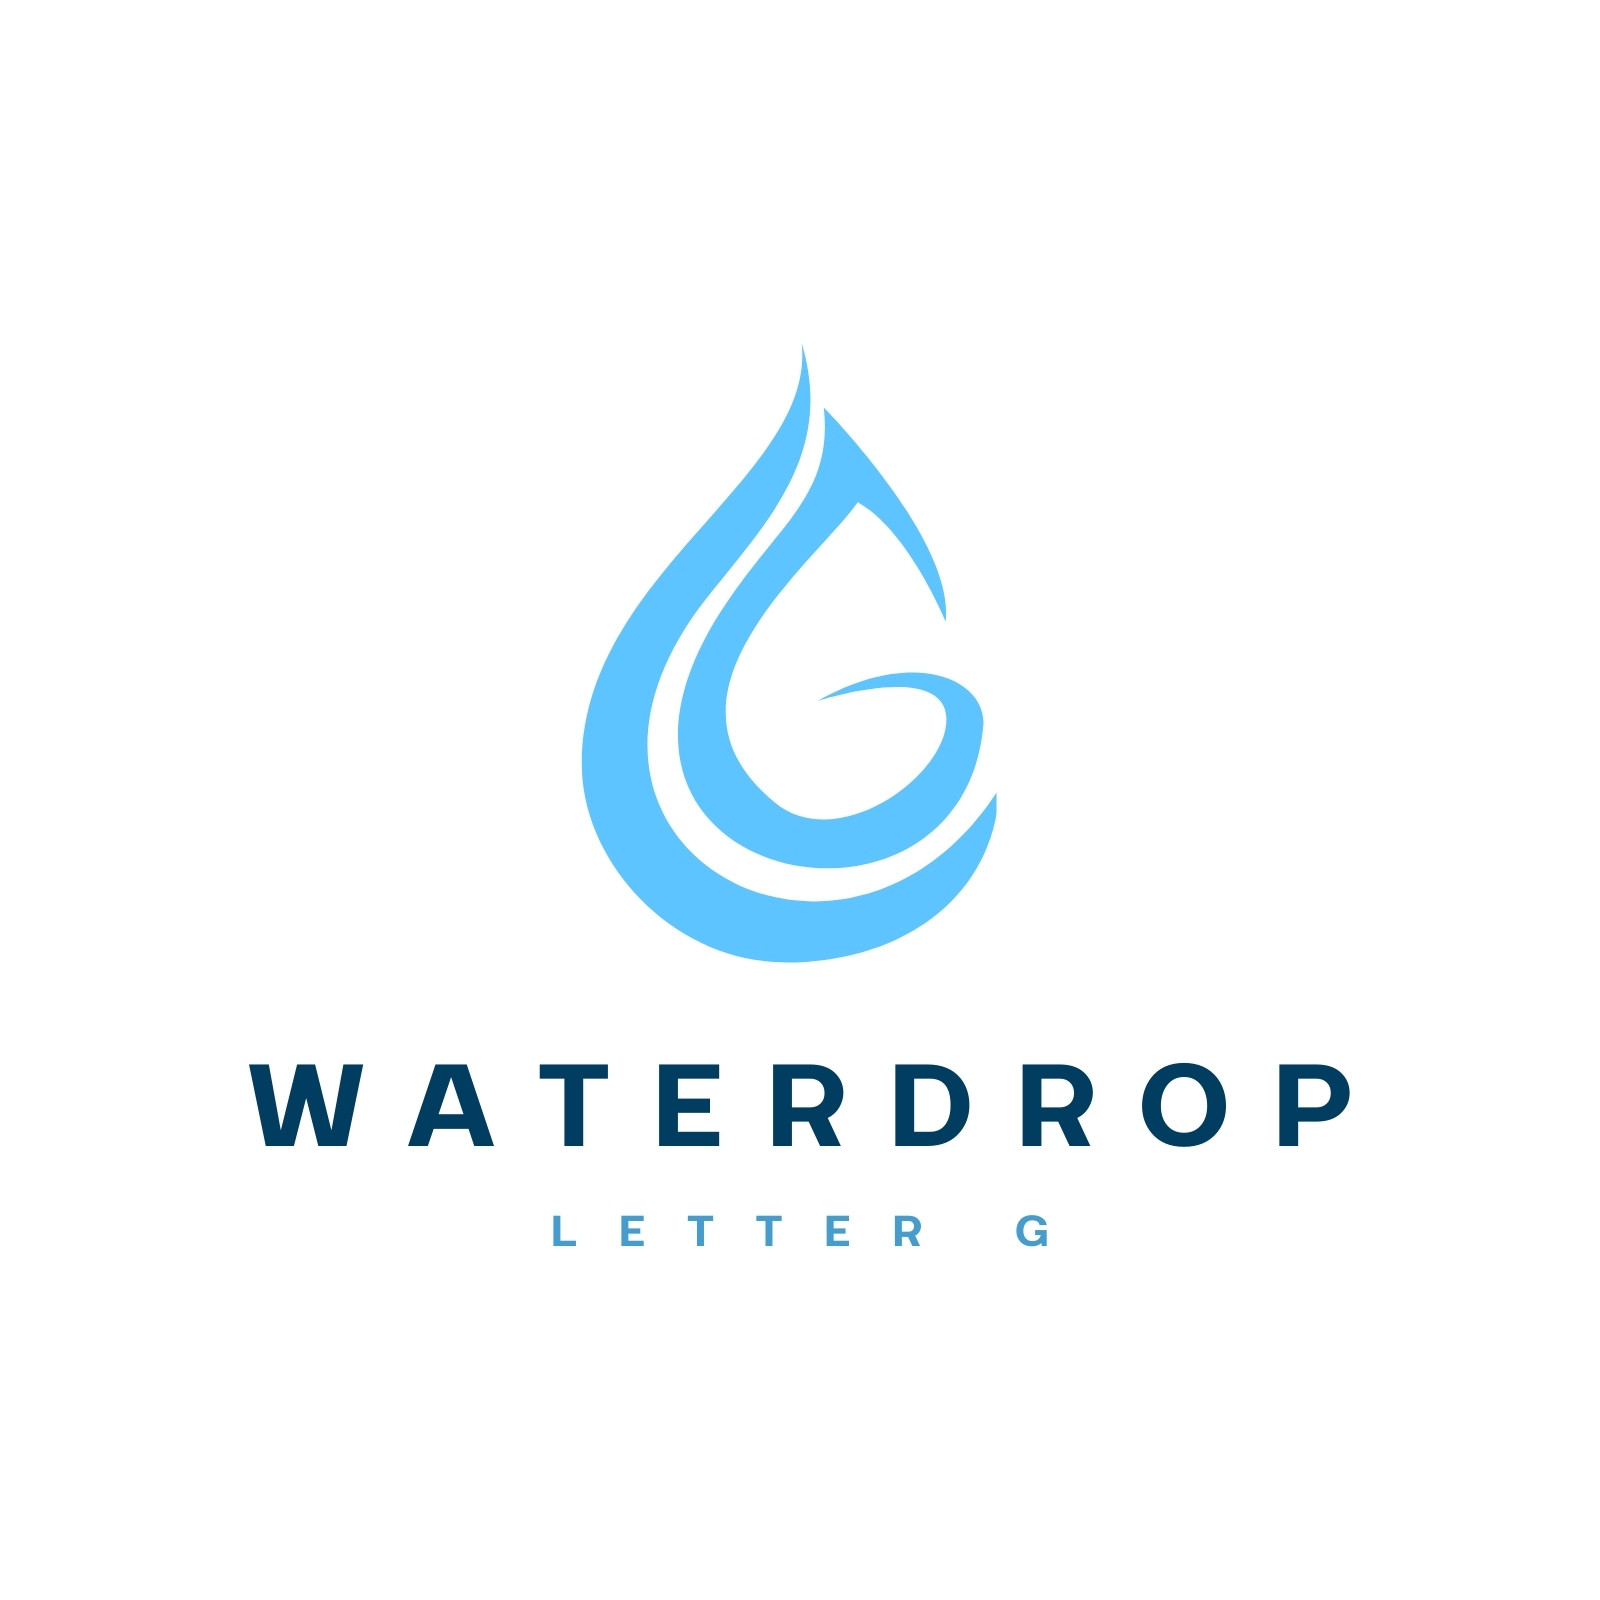 Water drop logo design illustration vector template - stock vector 2942960  | Crushpixel